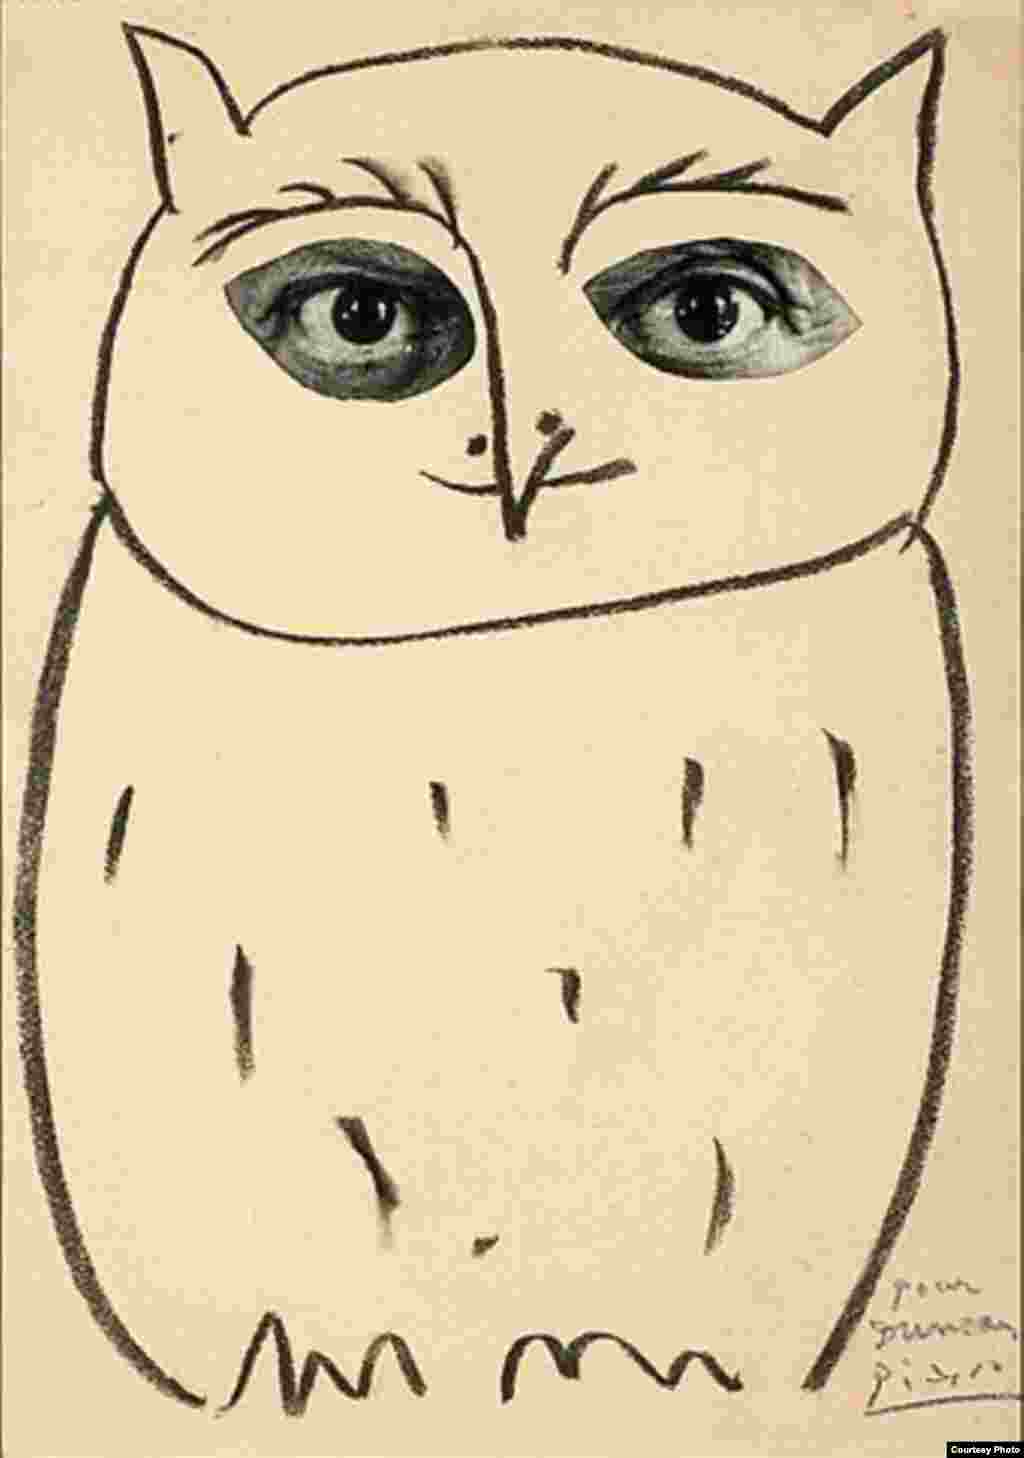 © Pablo Picasso, “The Great Snow Owl”, Picassos selfportrait as an owl. La Californie, 1957